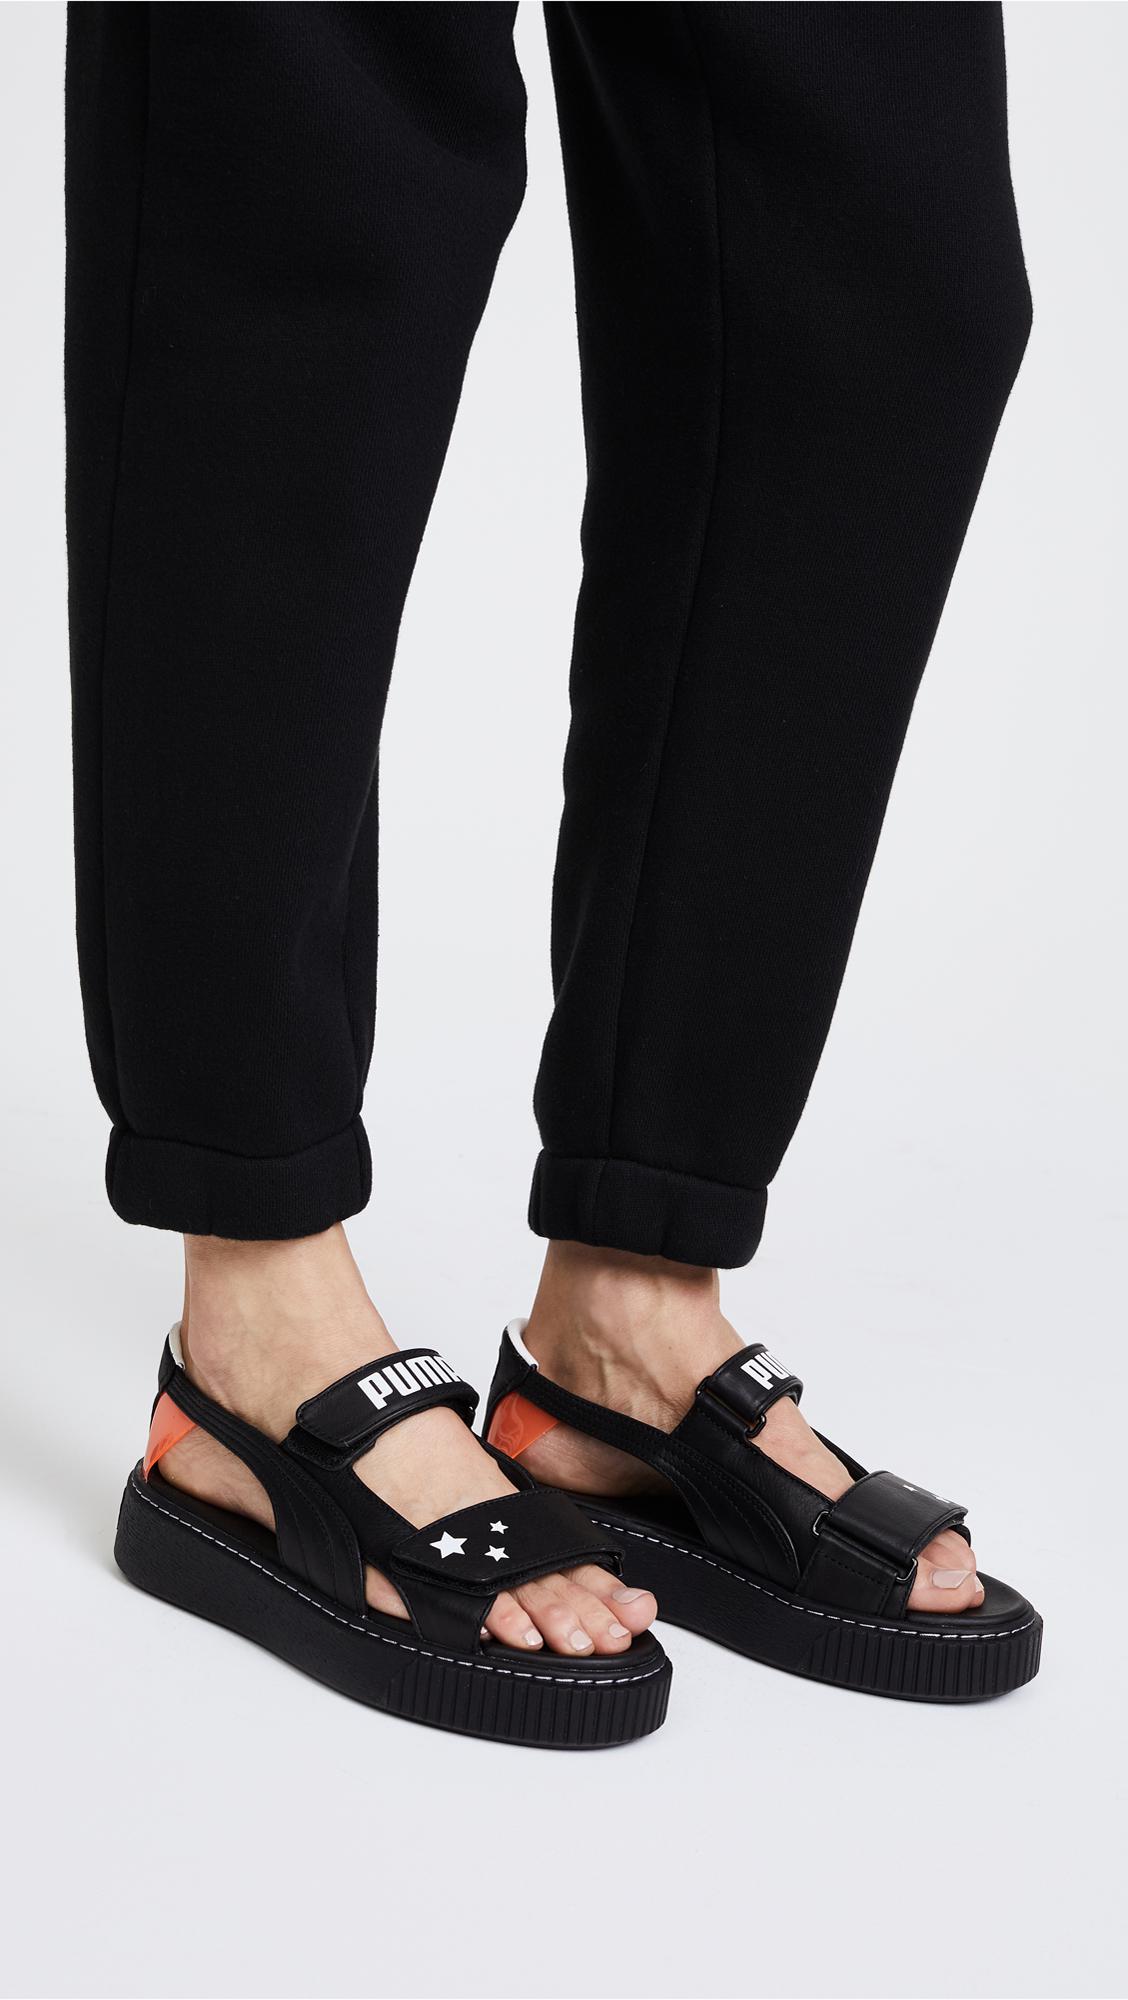 Maxim Paine Gillic Wind PUMA X Sophia Webster Platform Sandals in Black | Lyst